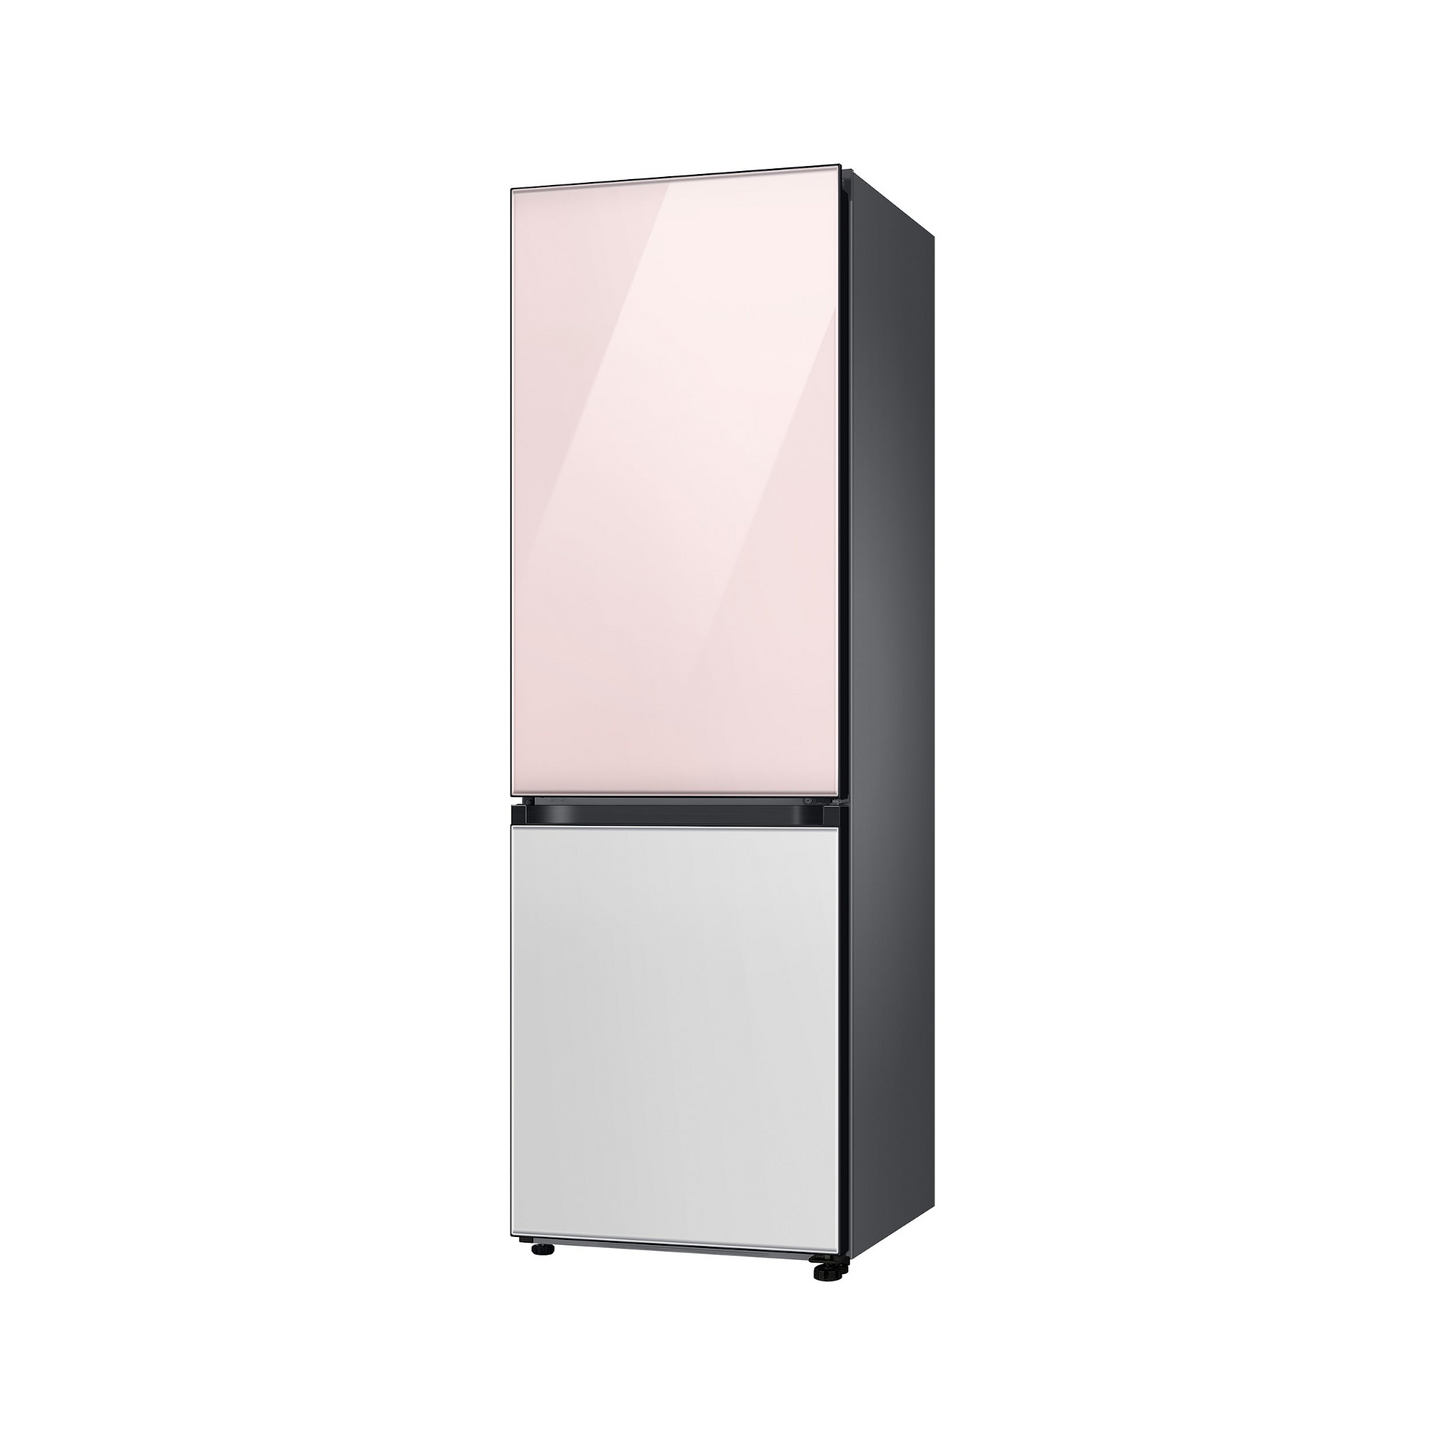 Refrigerador Smart BMF Bespoke 328 L Clean White/Pink1#Blanco|Rosado